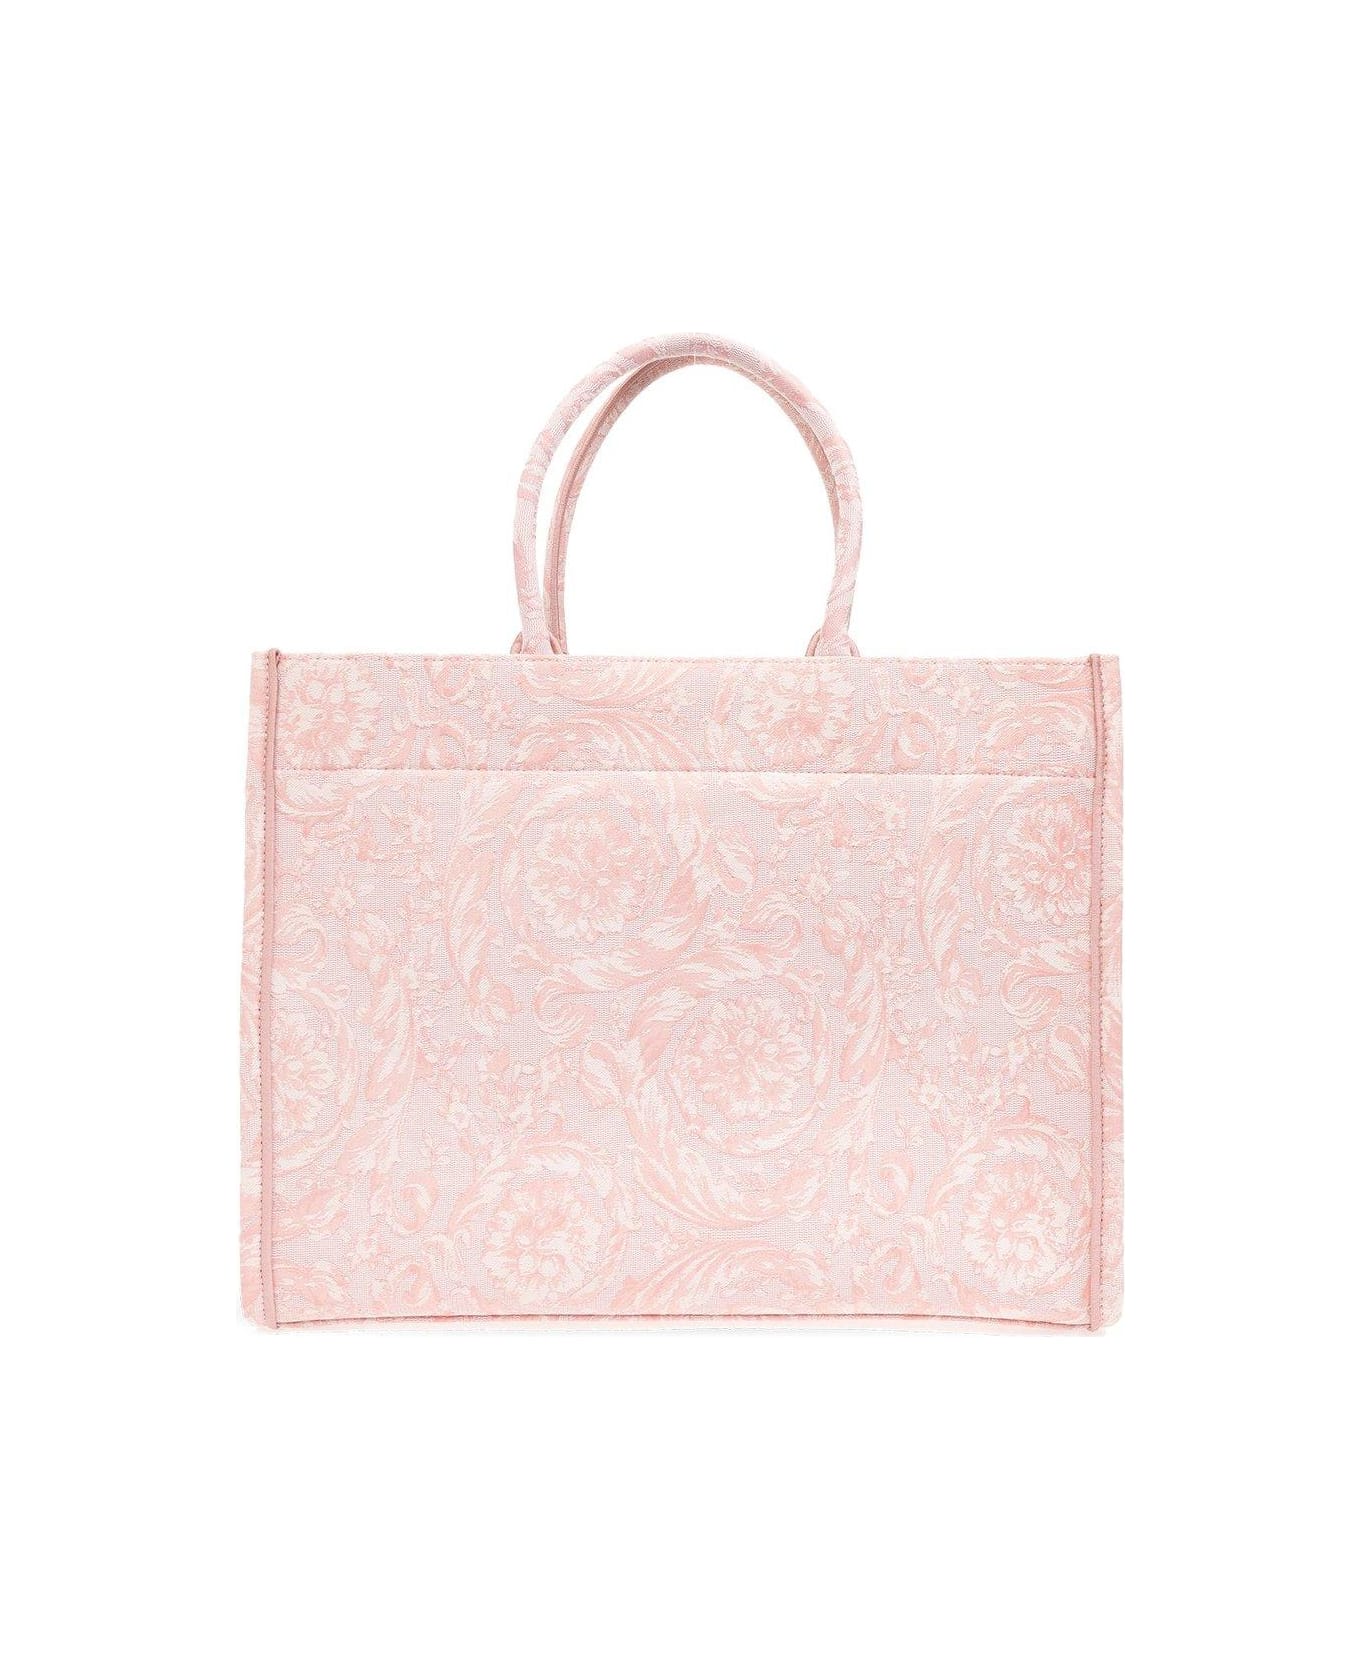 Versace Athena Barocco Jacquard Large Tote Bag - Pale Pink